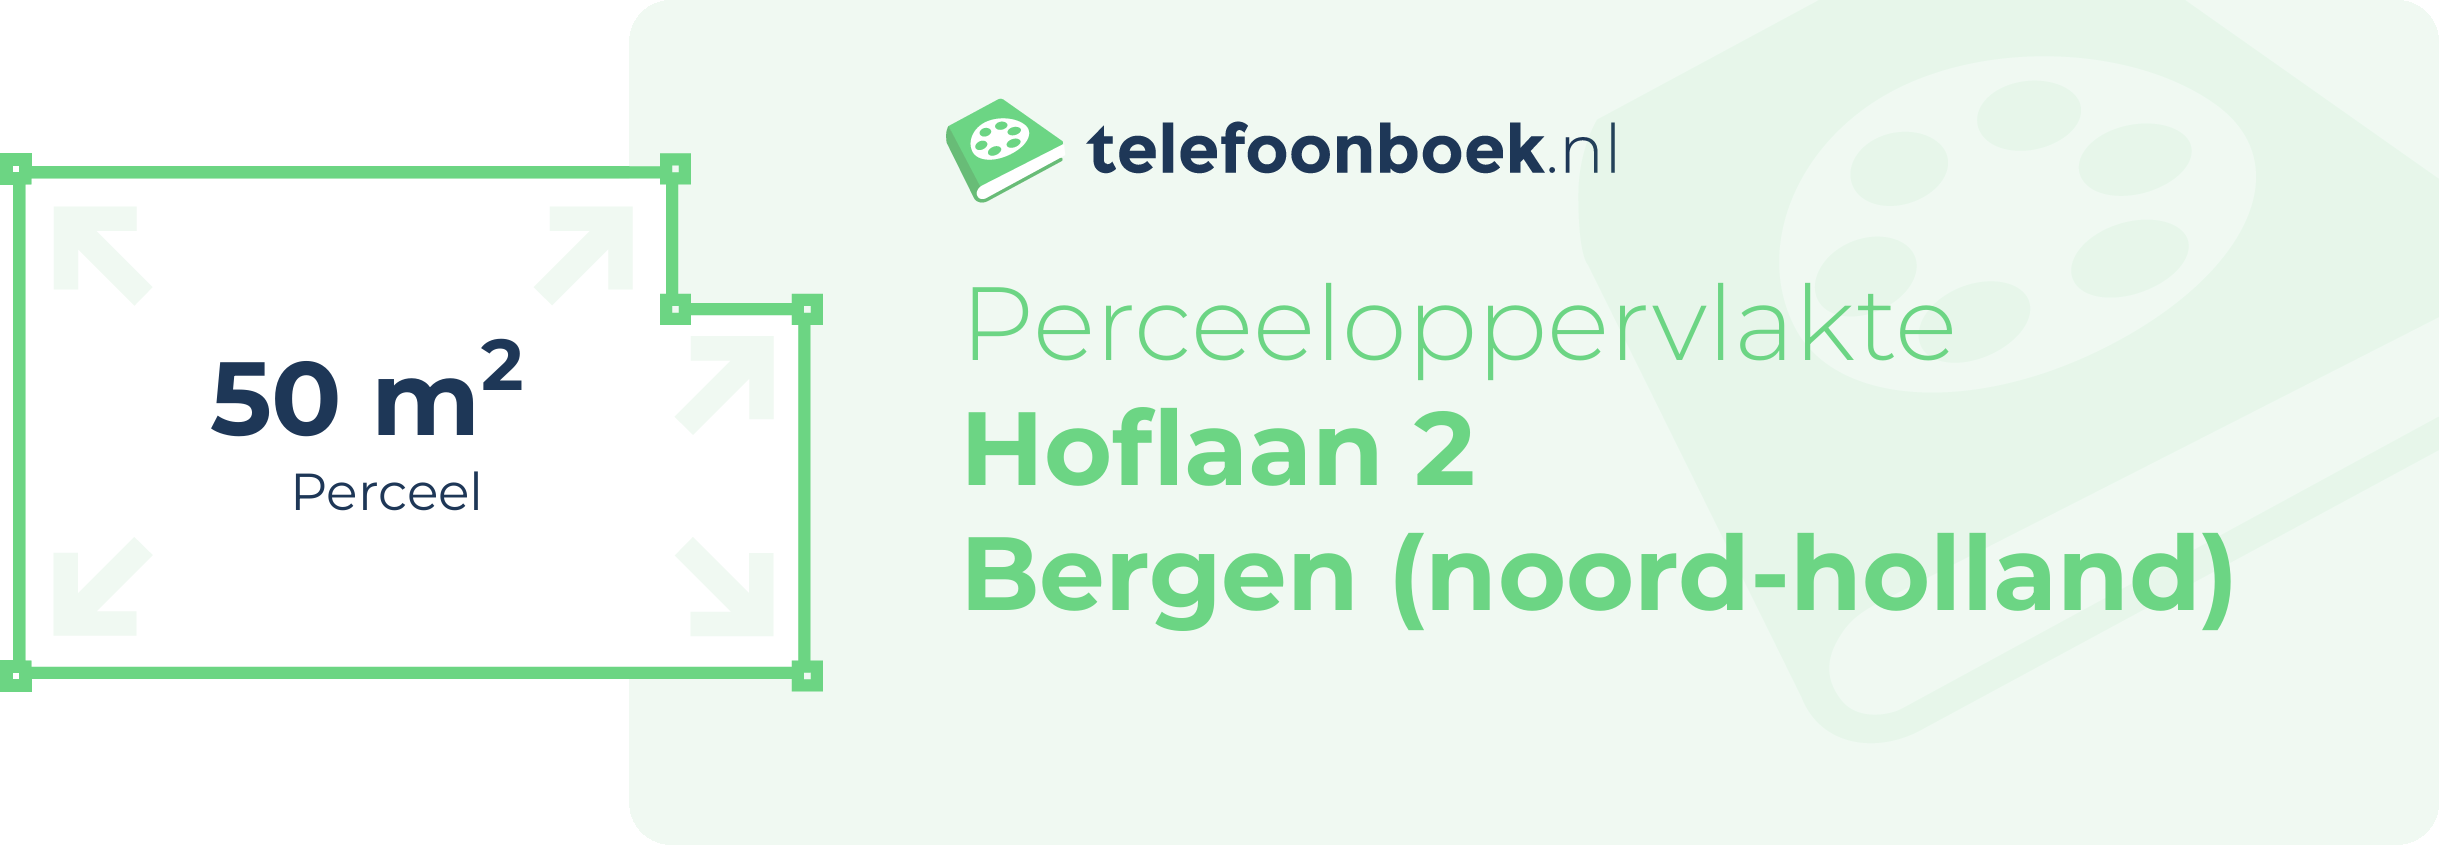 Perceeloppervlakte Hoflaan 2 Bergen (Noord-Holland)